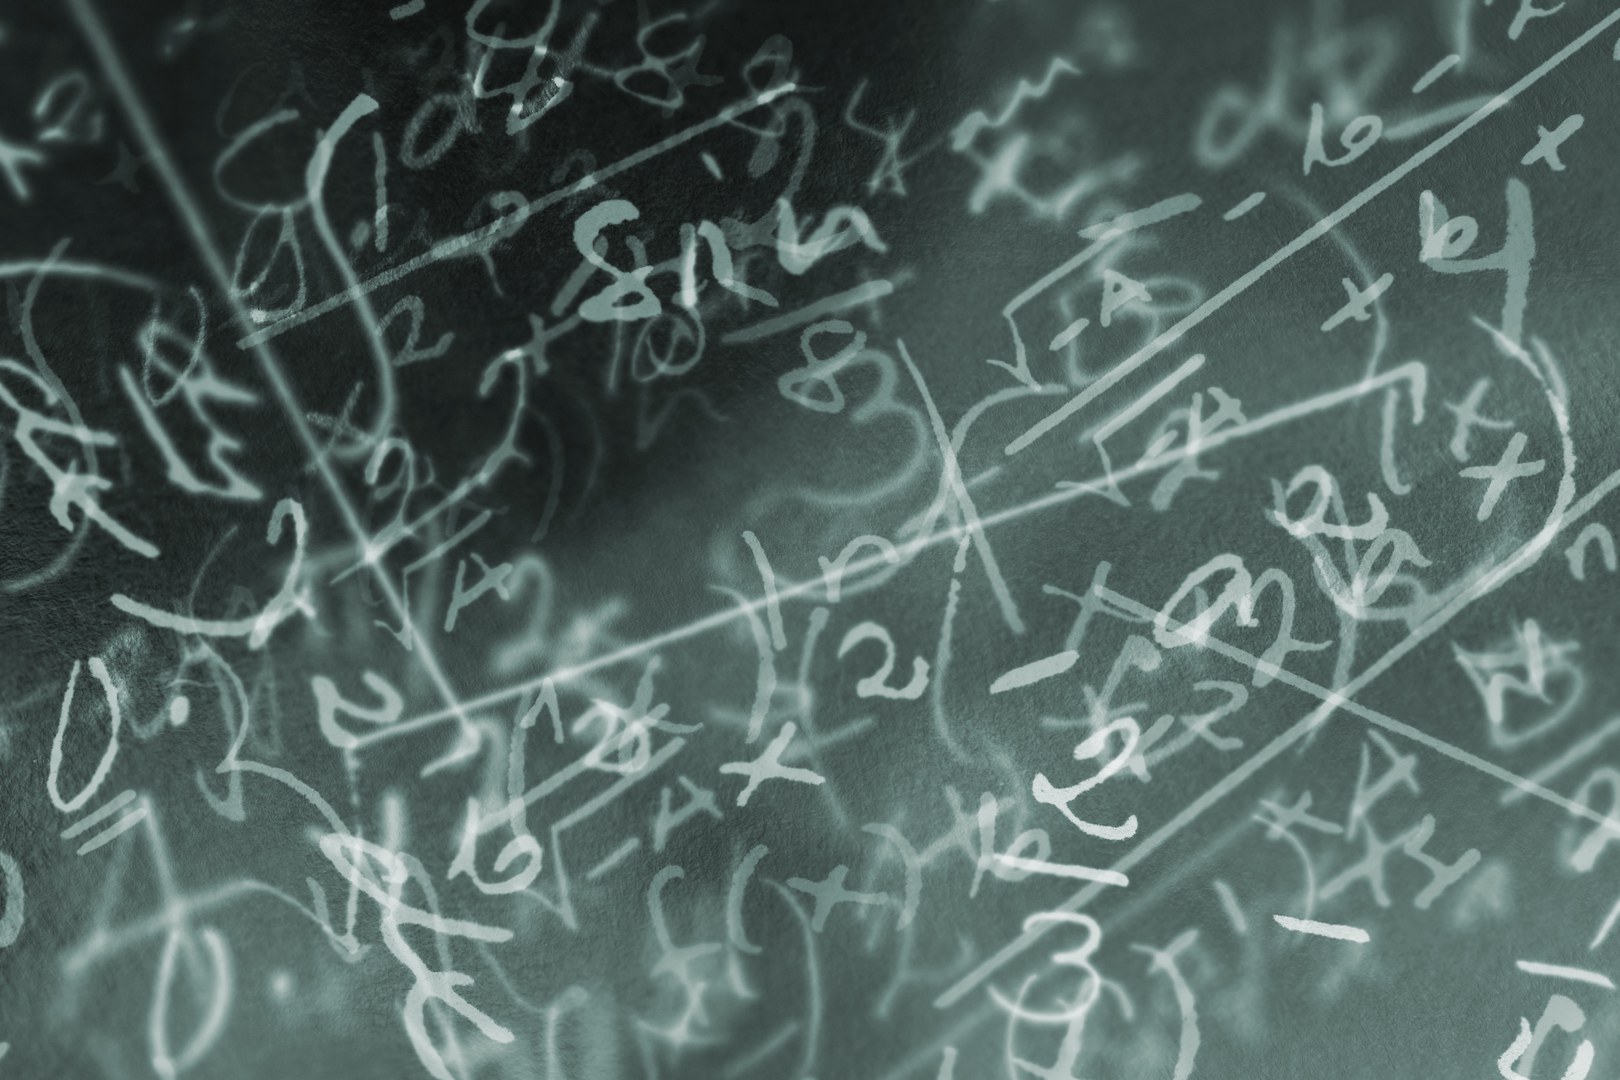 A blackboard with mathematical formulas